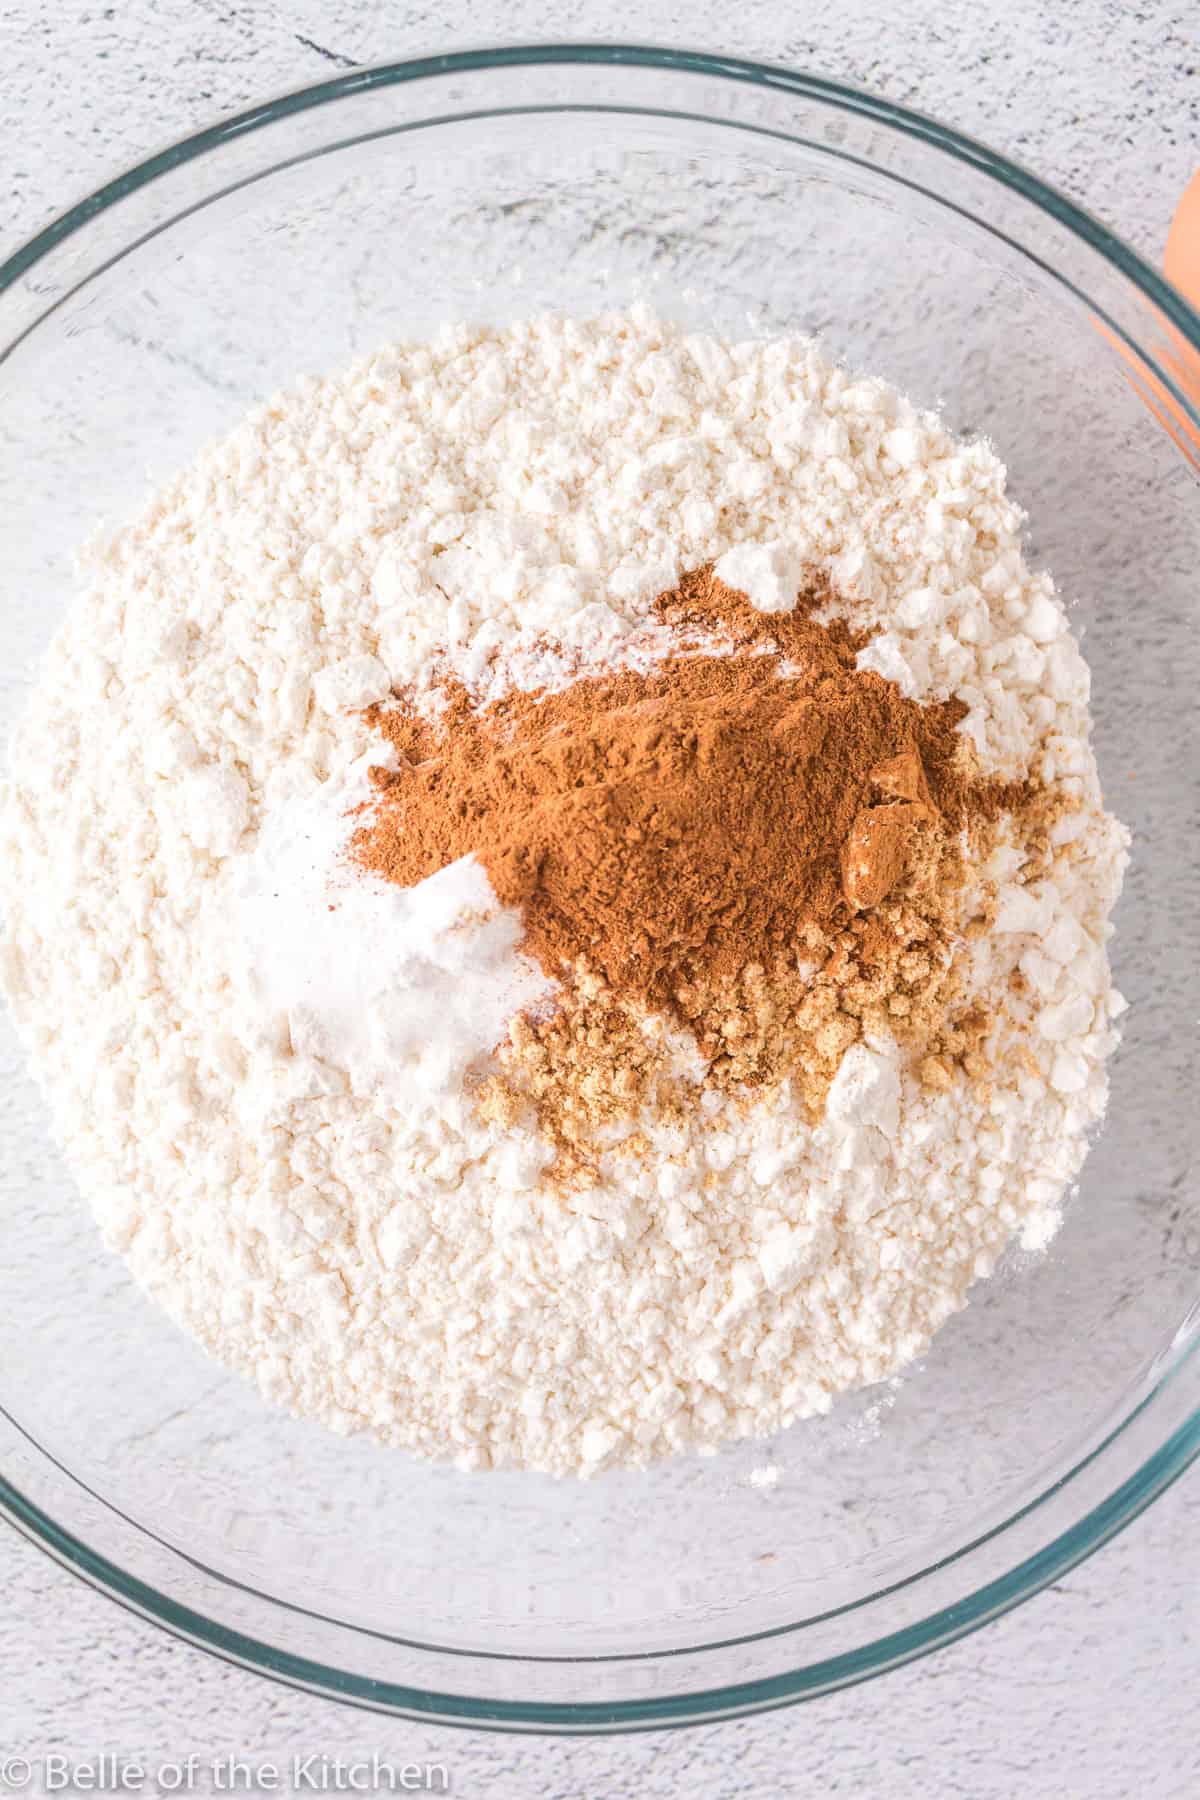 flour, cinnamon and baking soda in a bowl